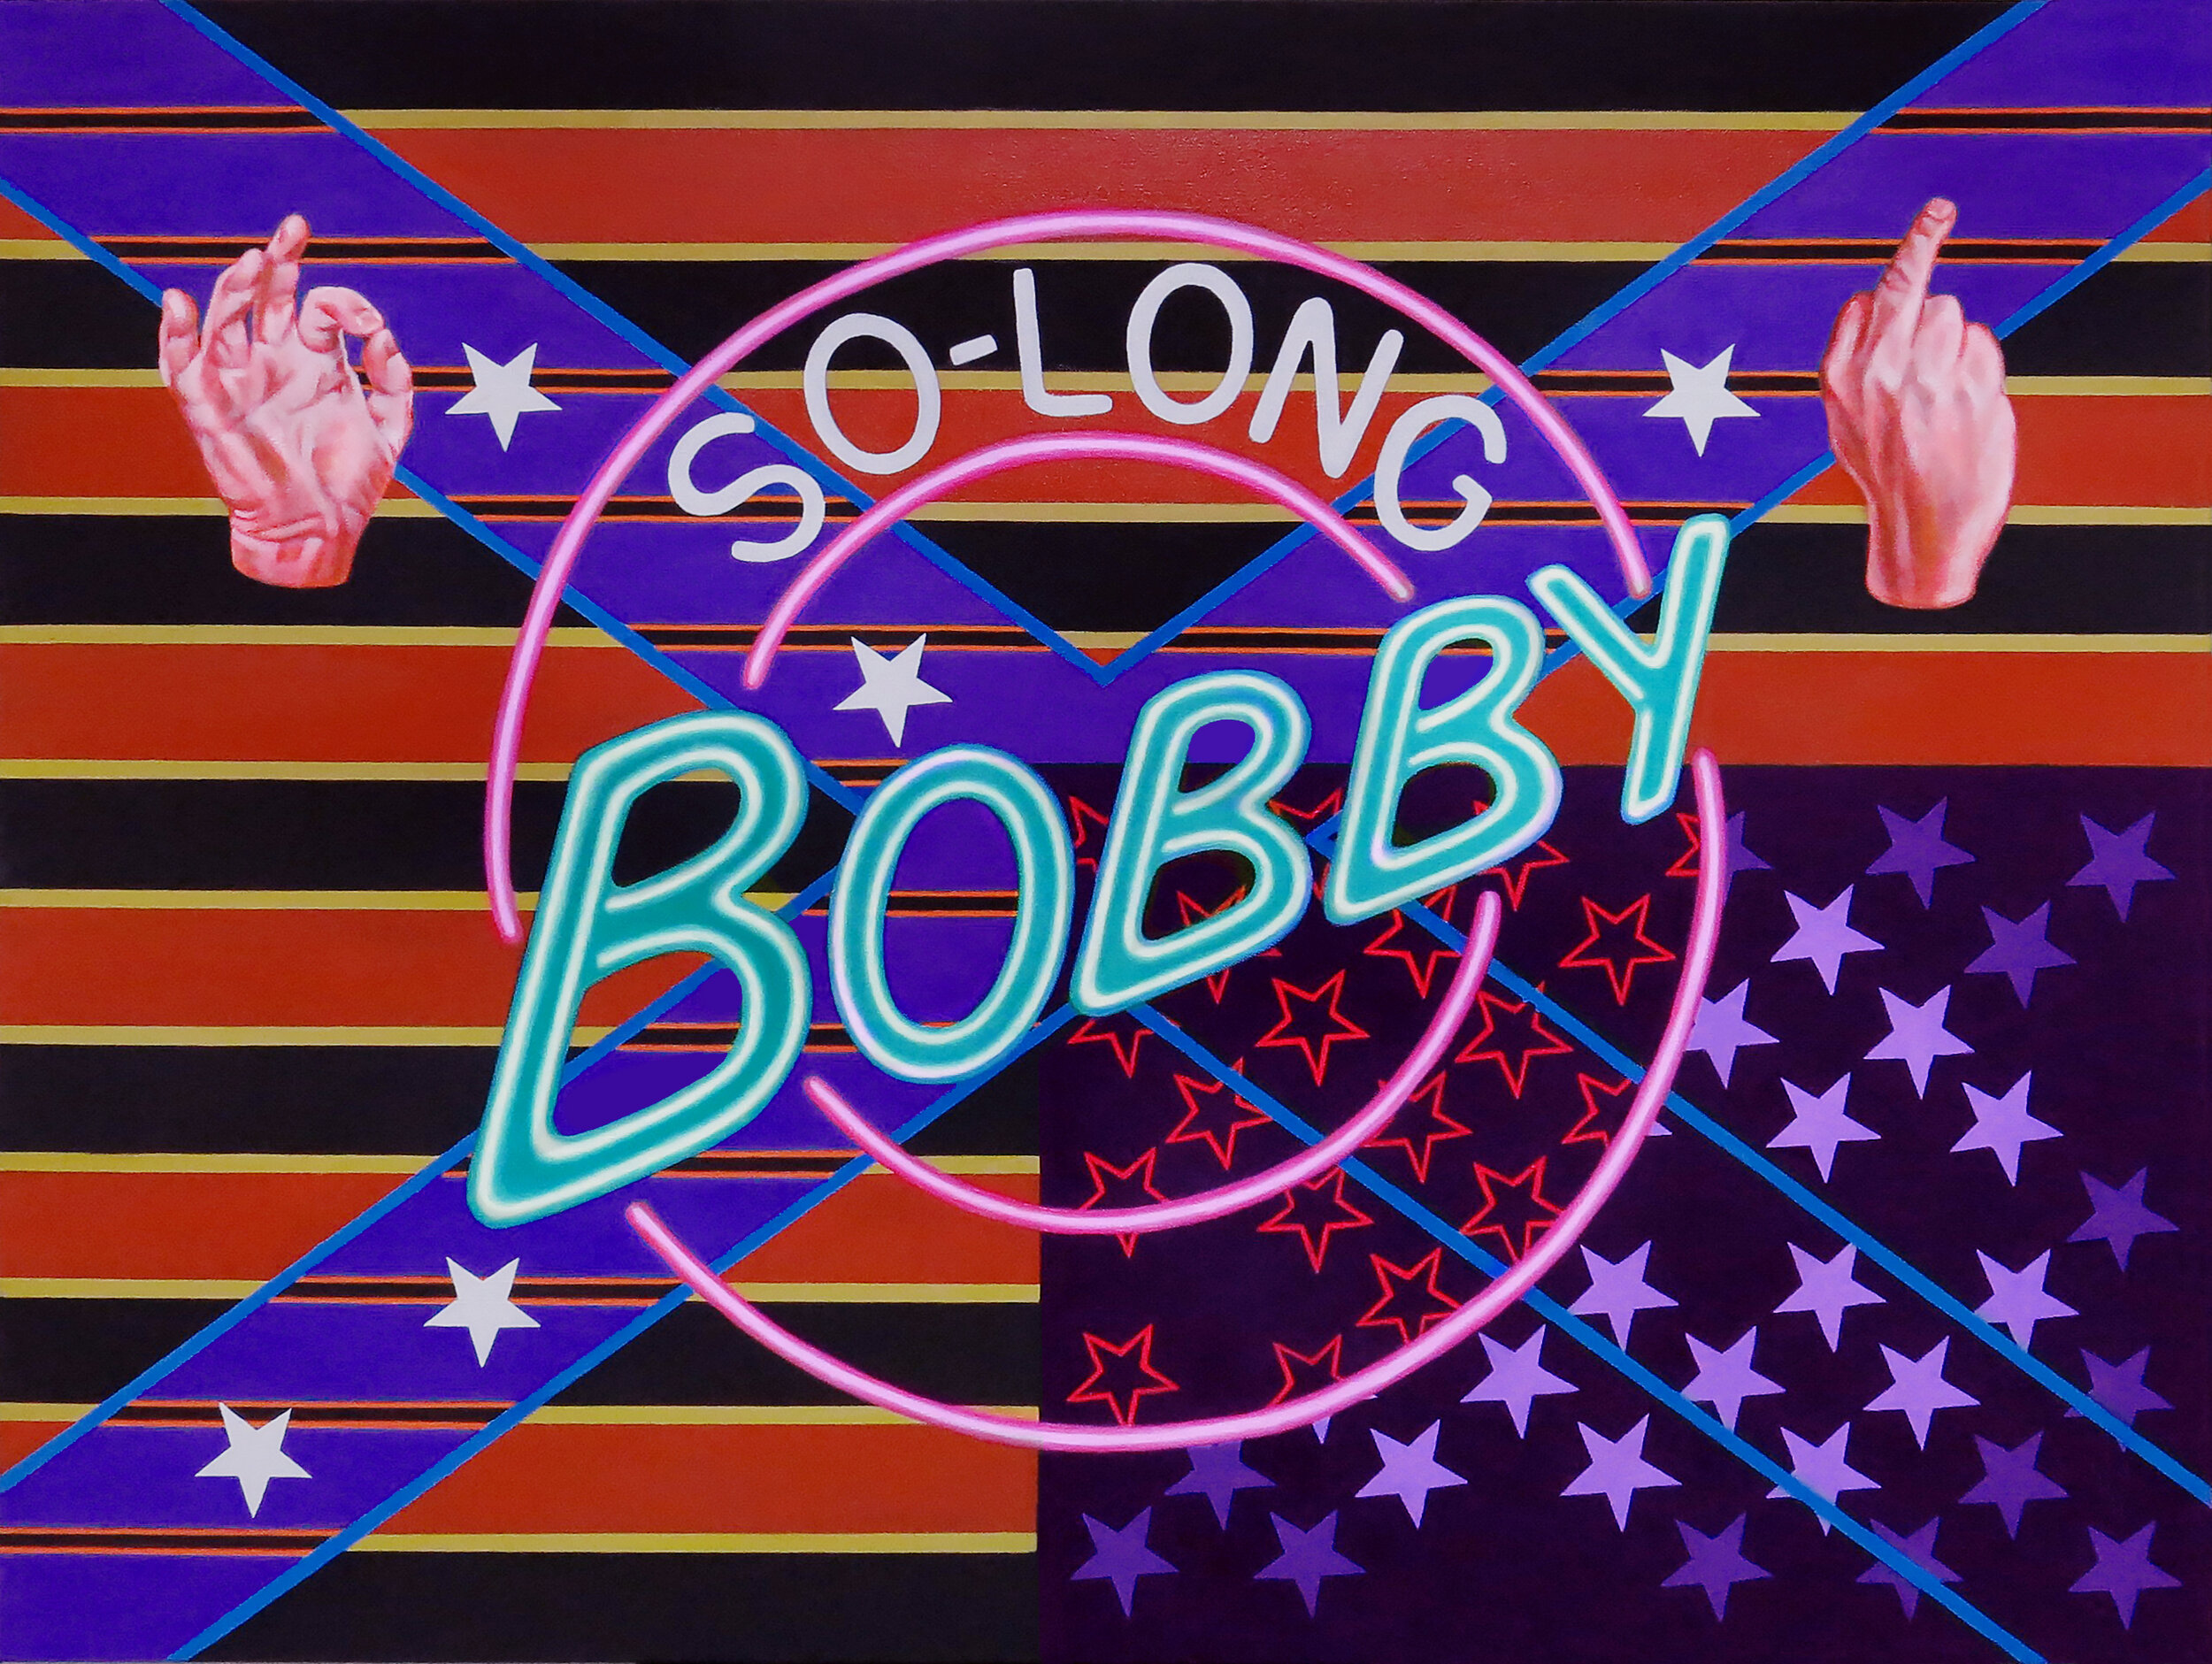 So Long Bobby #2